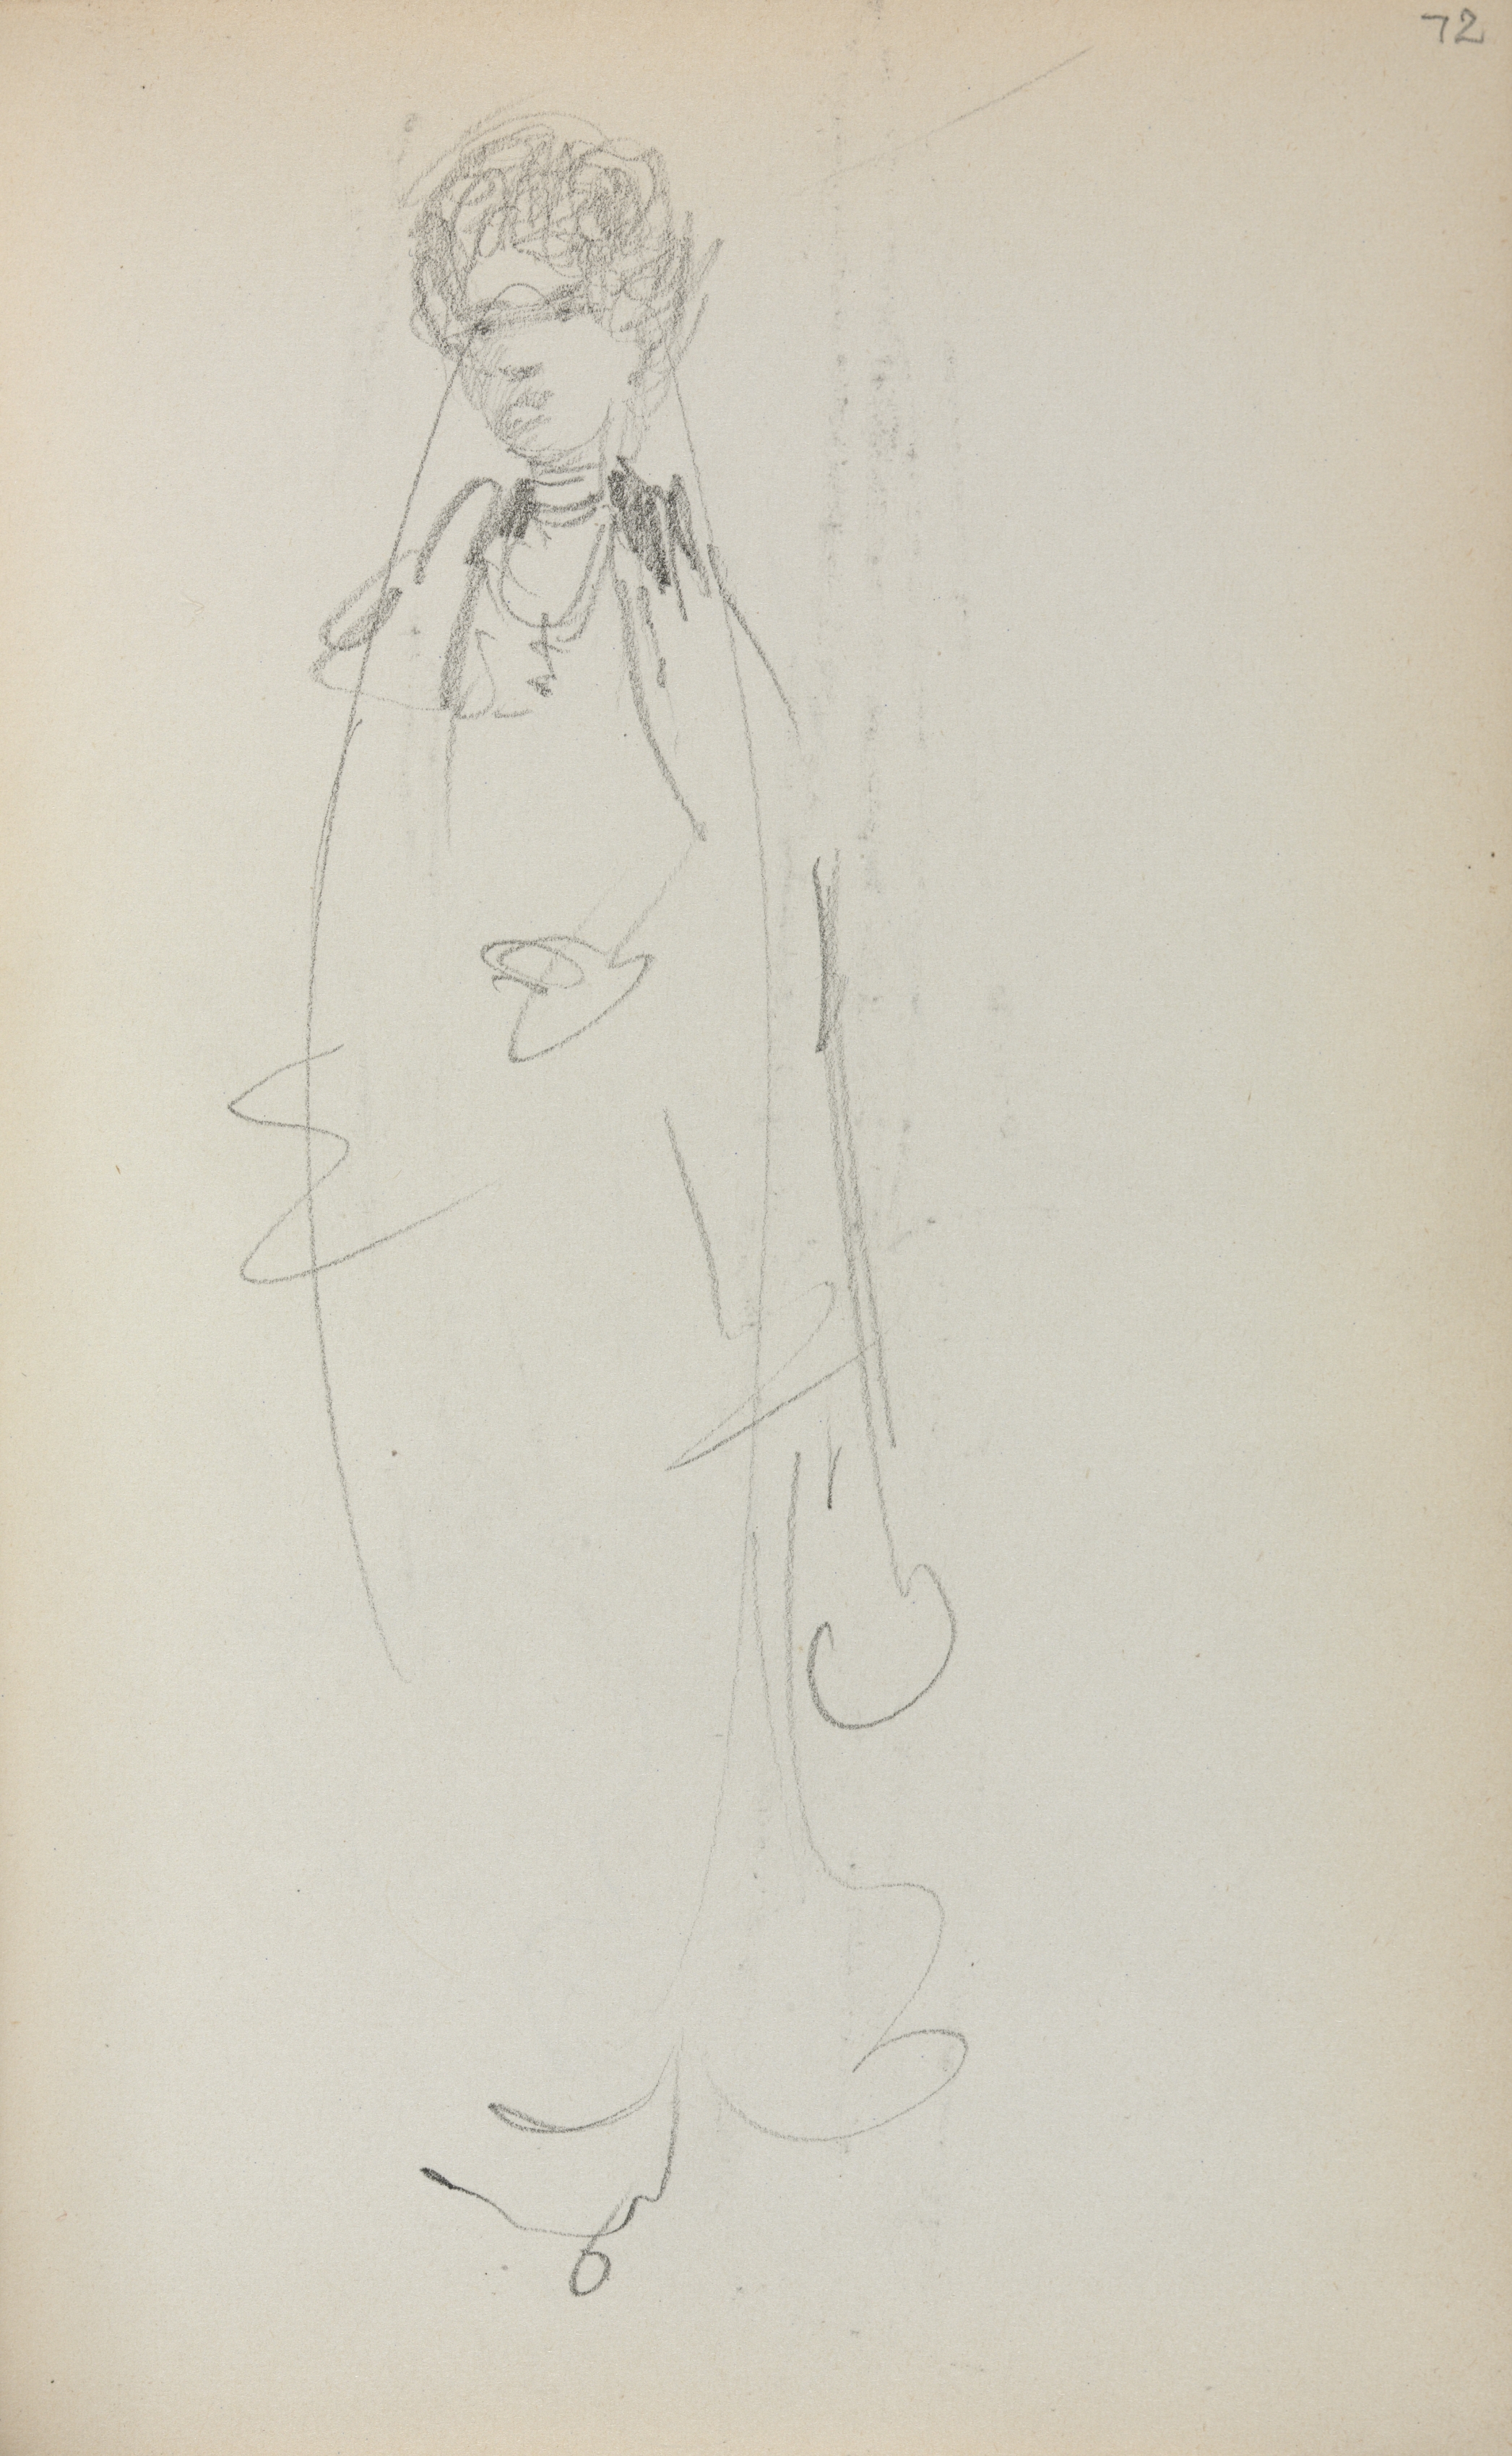 Italian Sketchbook: Standing Woman (page 72)